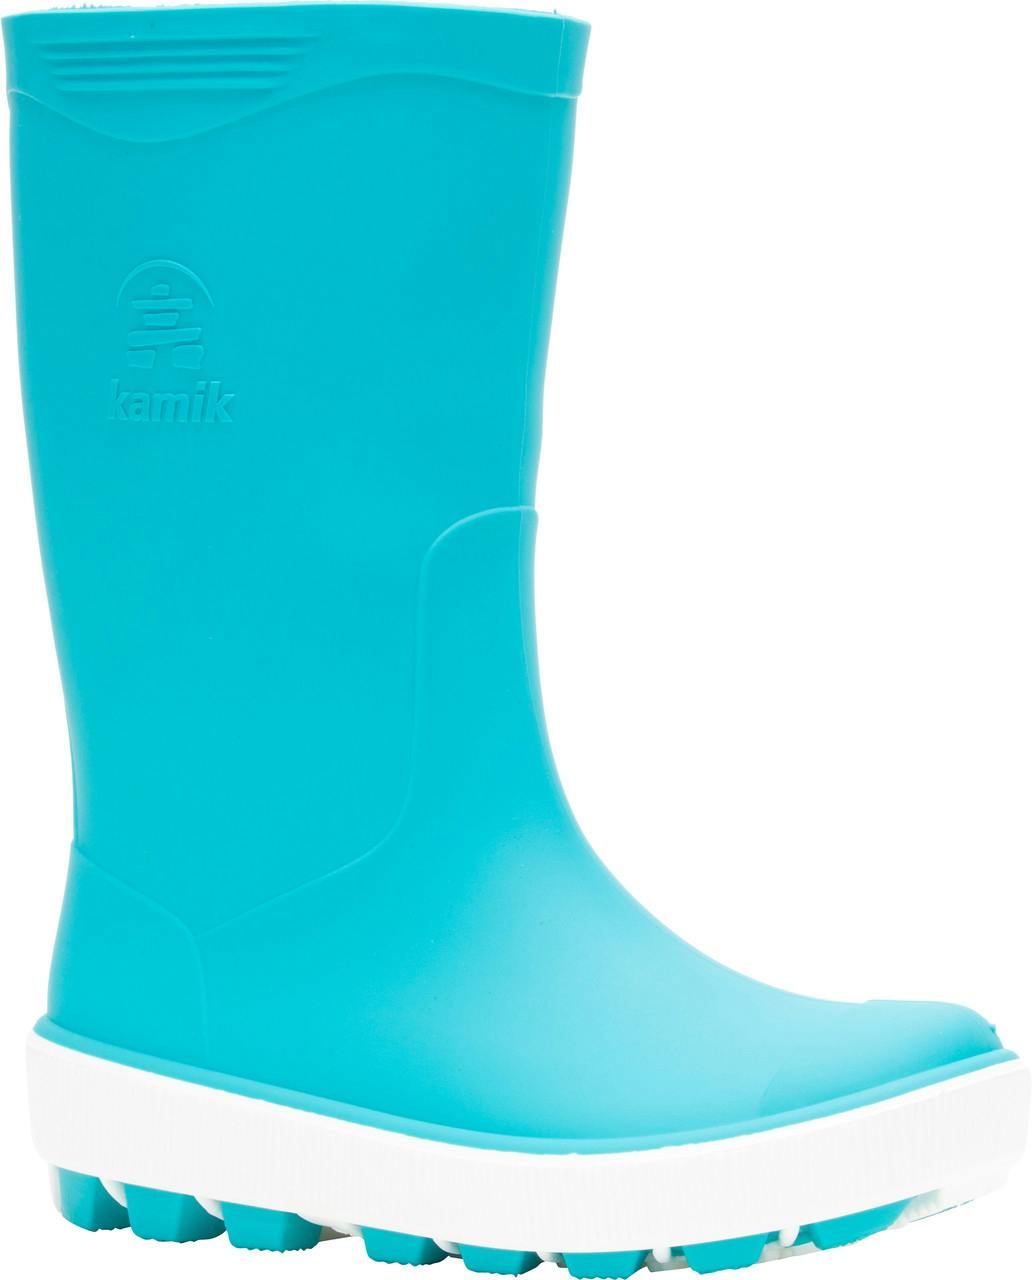 Riptide Rain Boots Light Blue